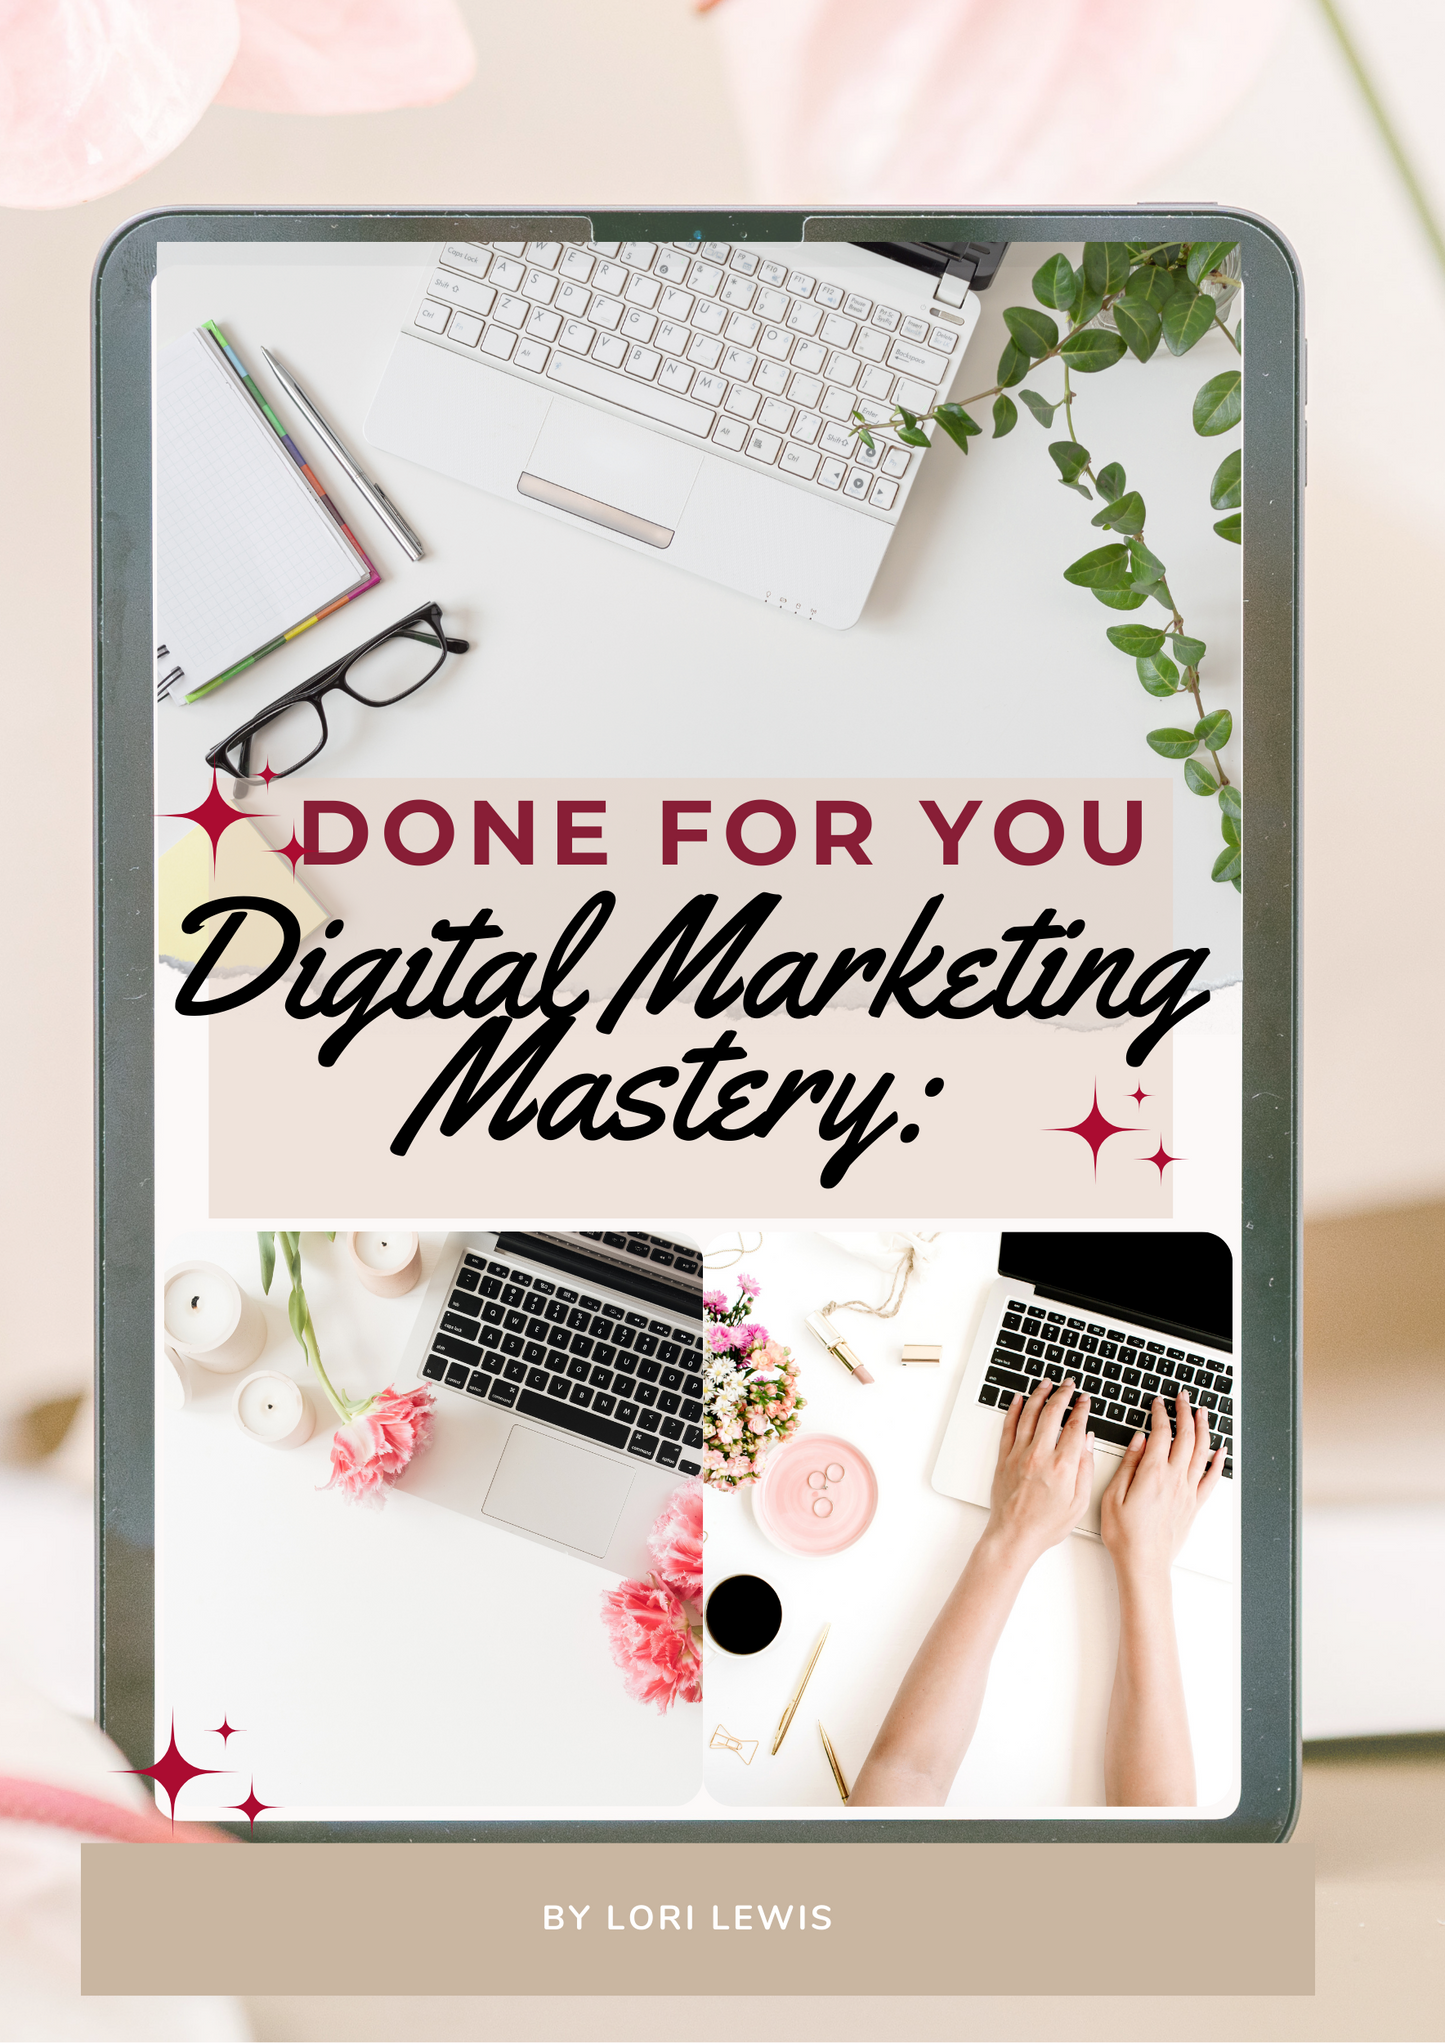 Digital Marketing Mastery "DFY" w/(MRR)